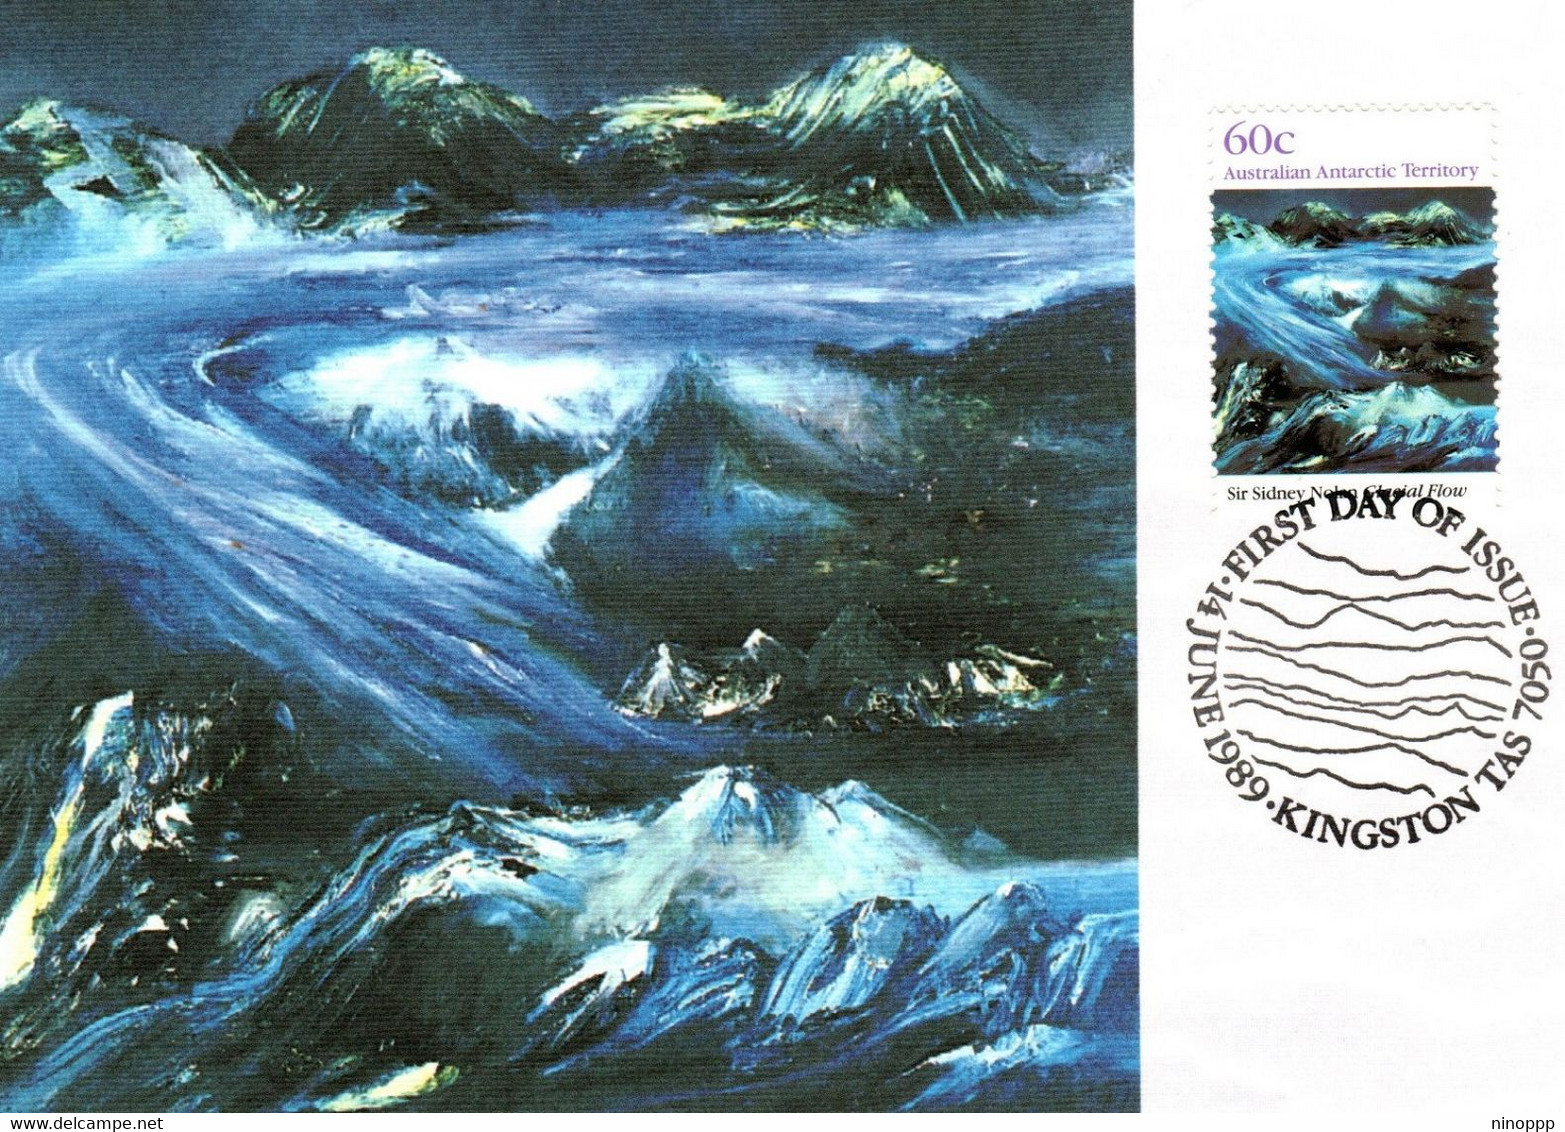 Australian Antarctic Territory 1989 Landscapes,Glacial Flow,maximum Card - Maximum Cards